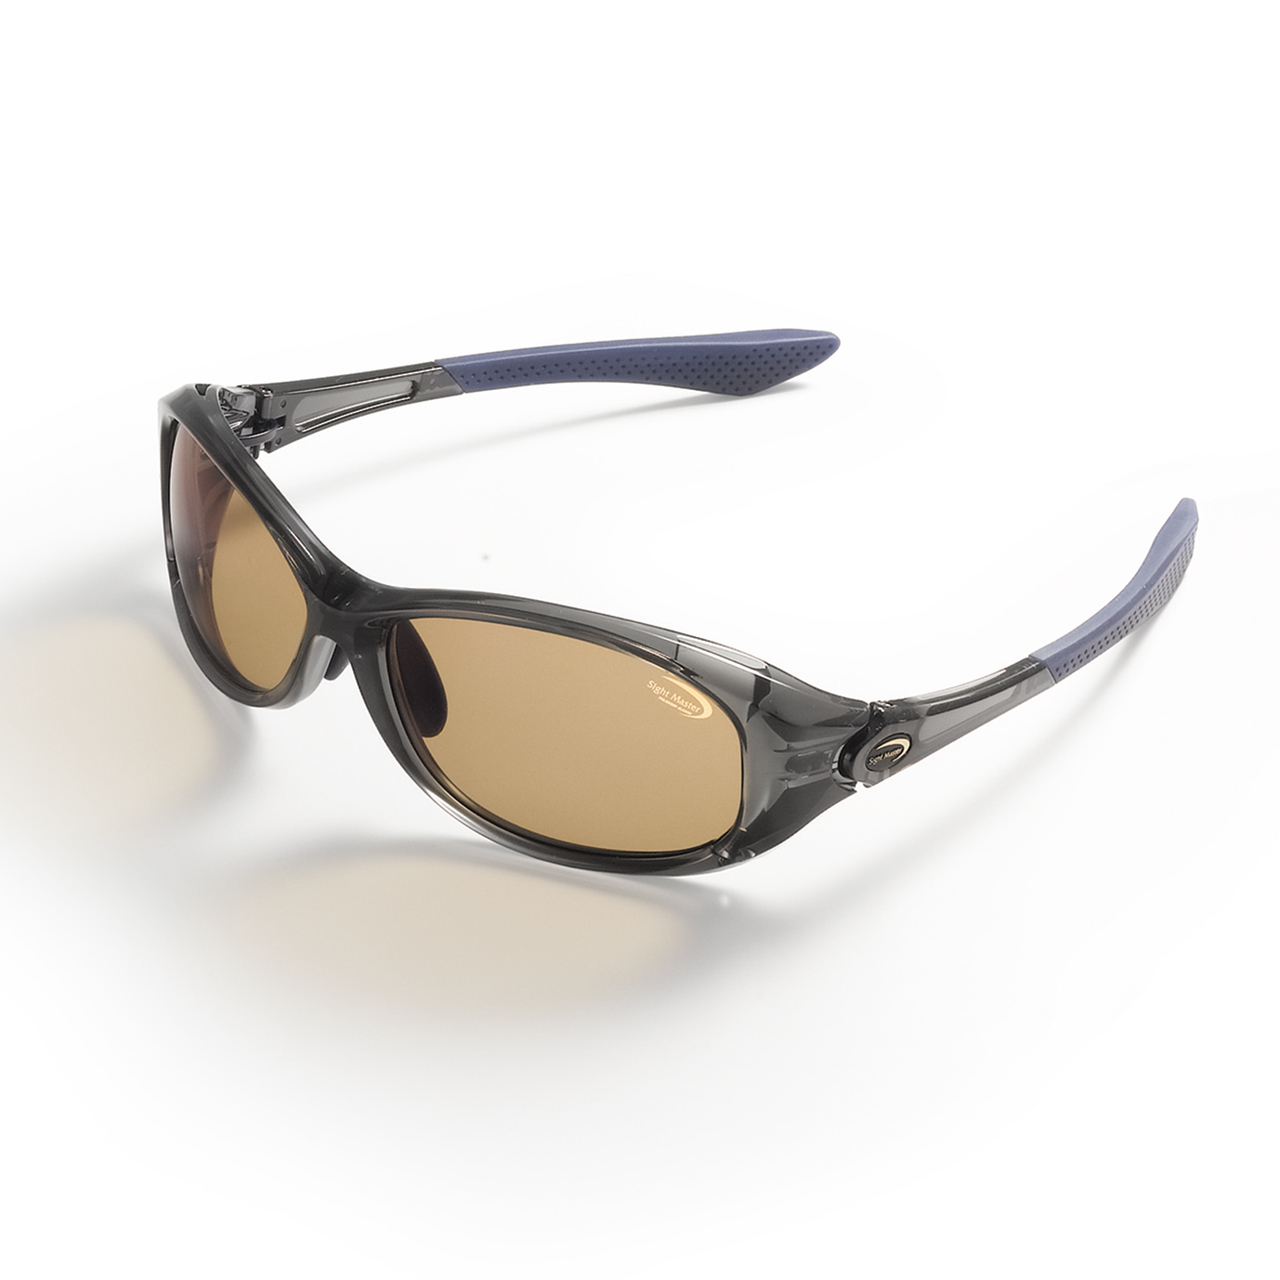 E】TIMCO SightMaster TALEX eyewear BROWN-